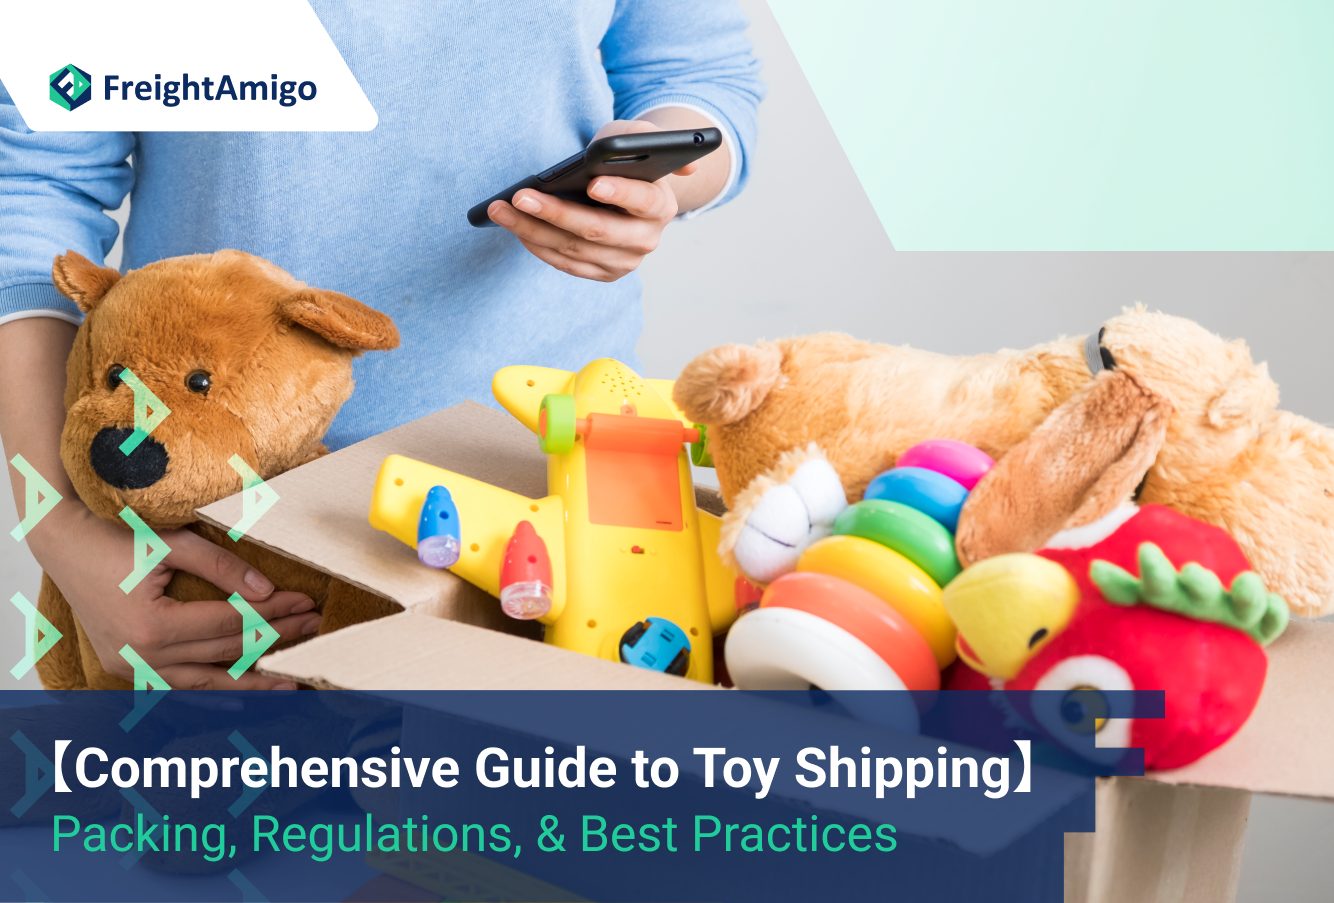 Comprehensive Guide to Toy Shipping, FreightAmigo